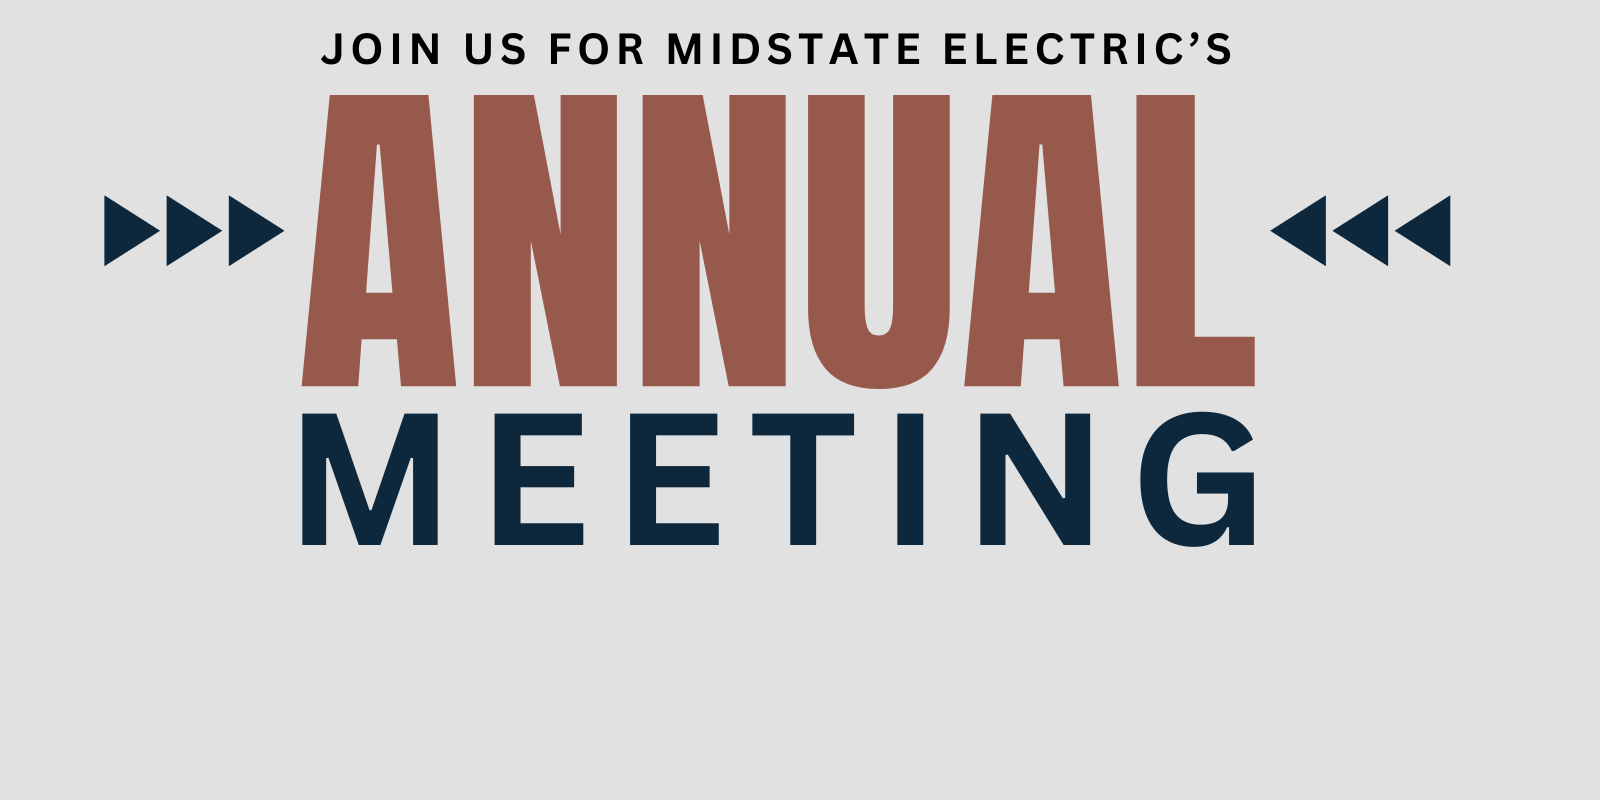 Annual Meeting Banner